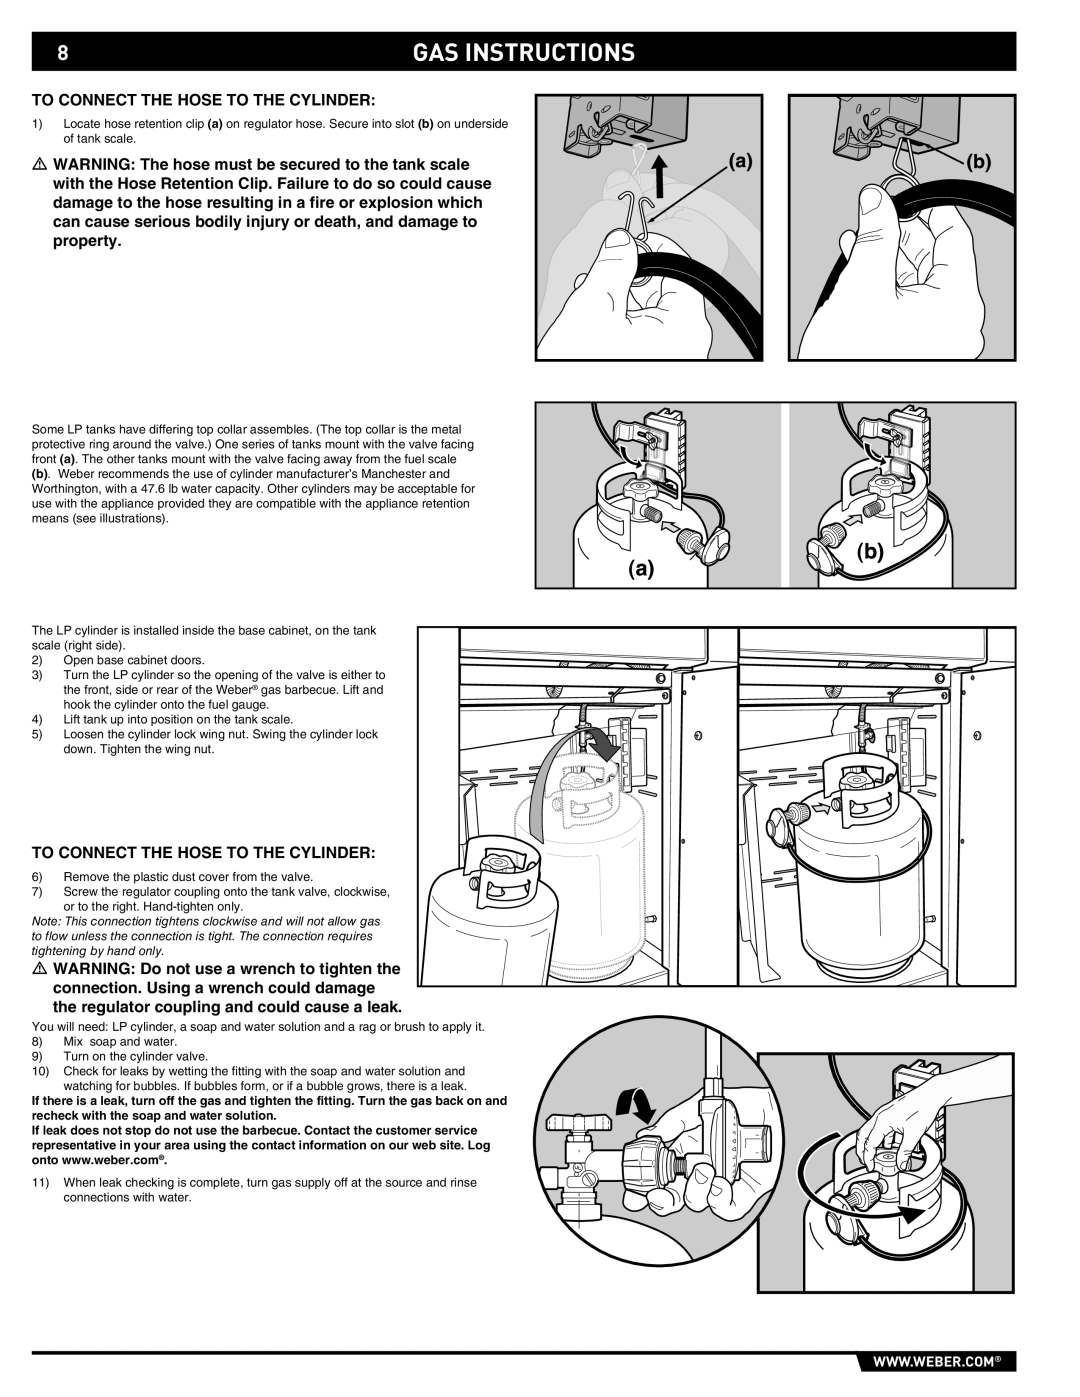 Summit 89190 manual Gas Instructions 